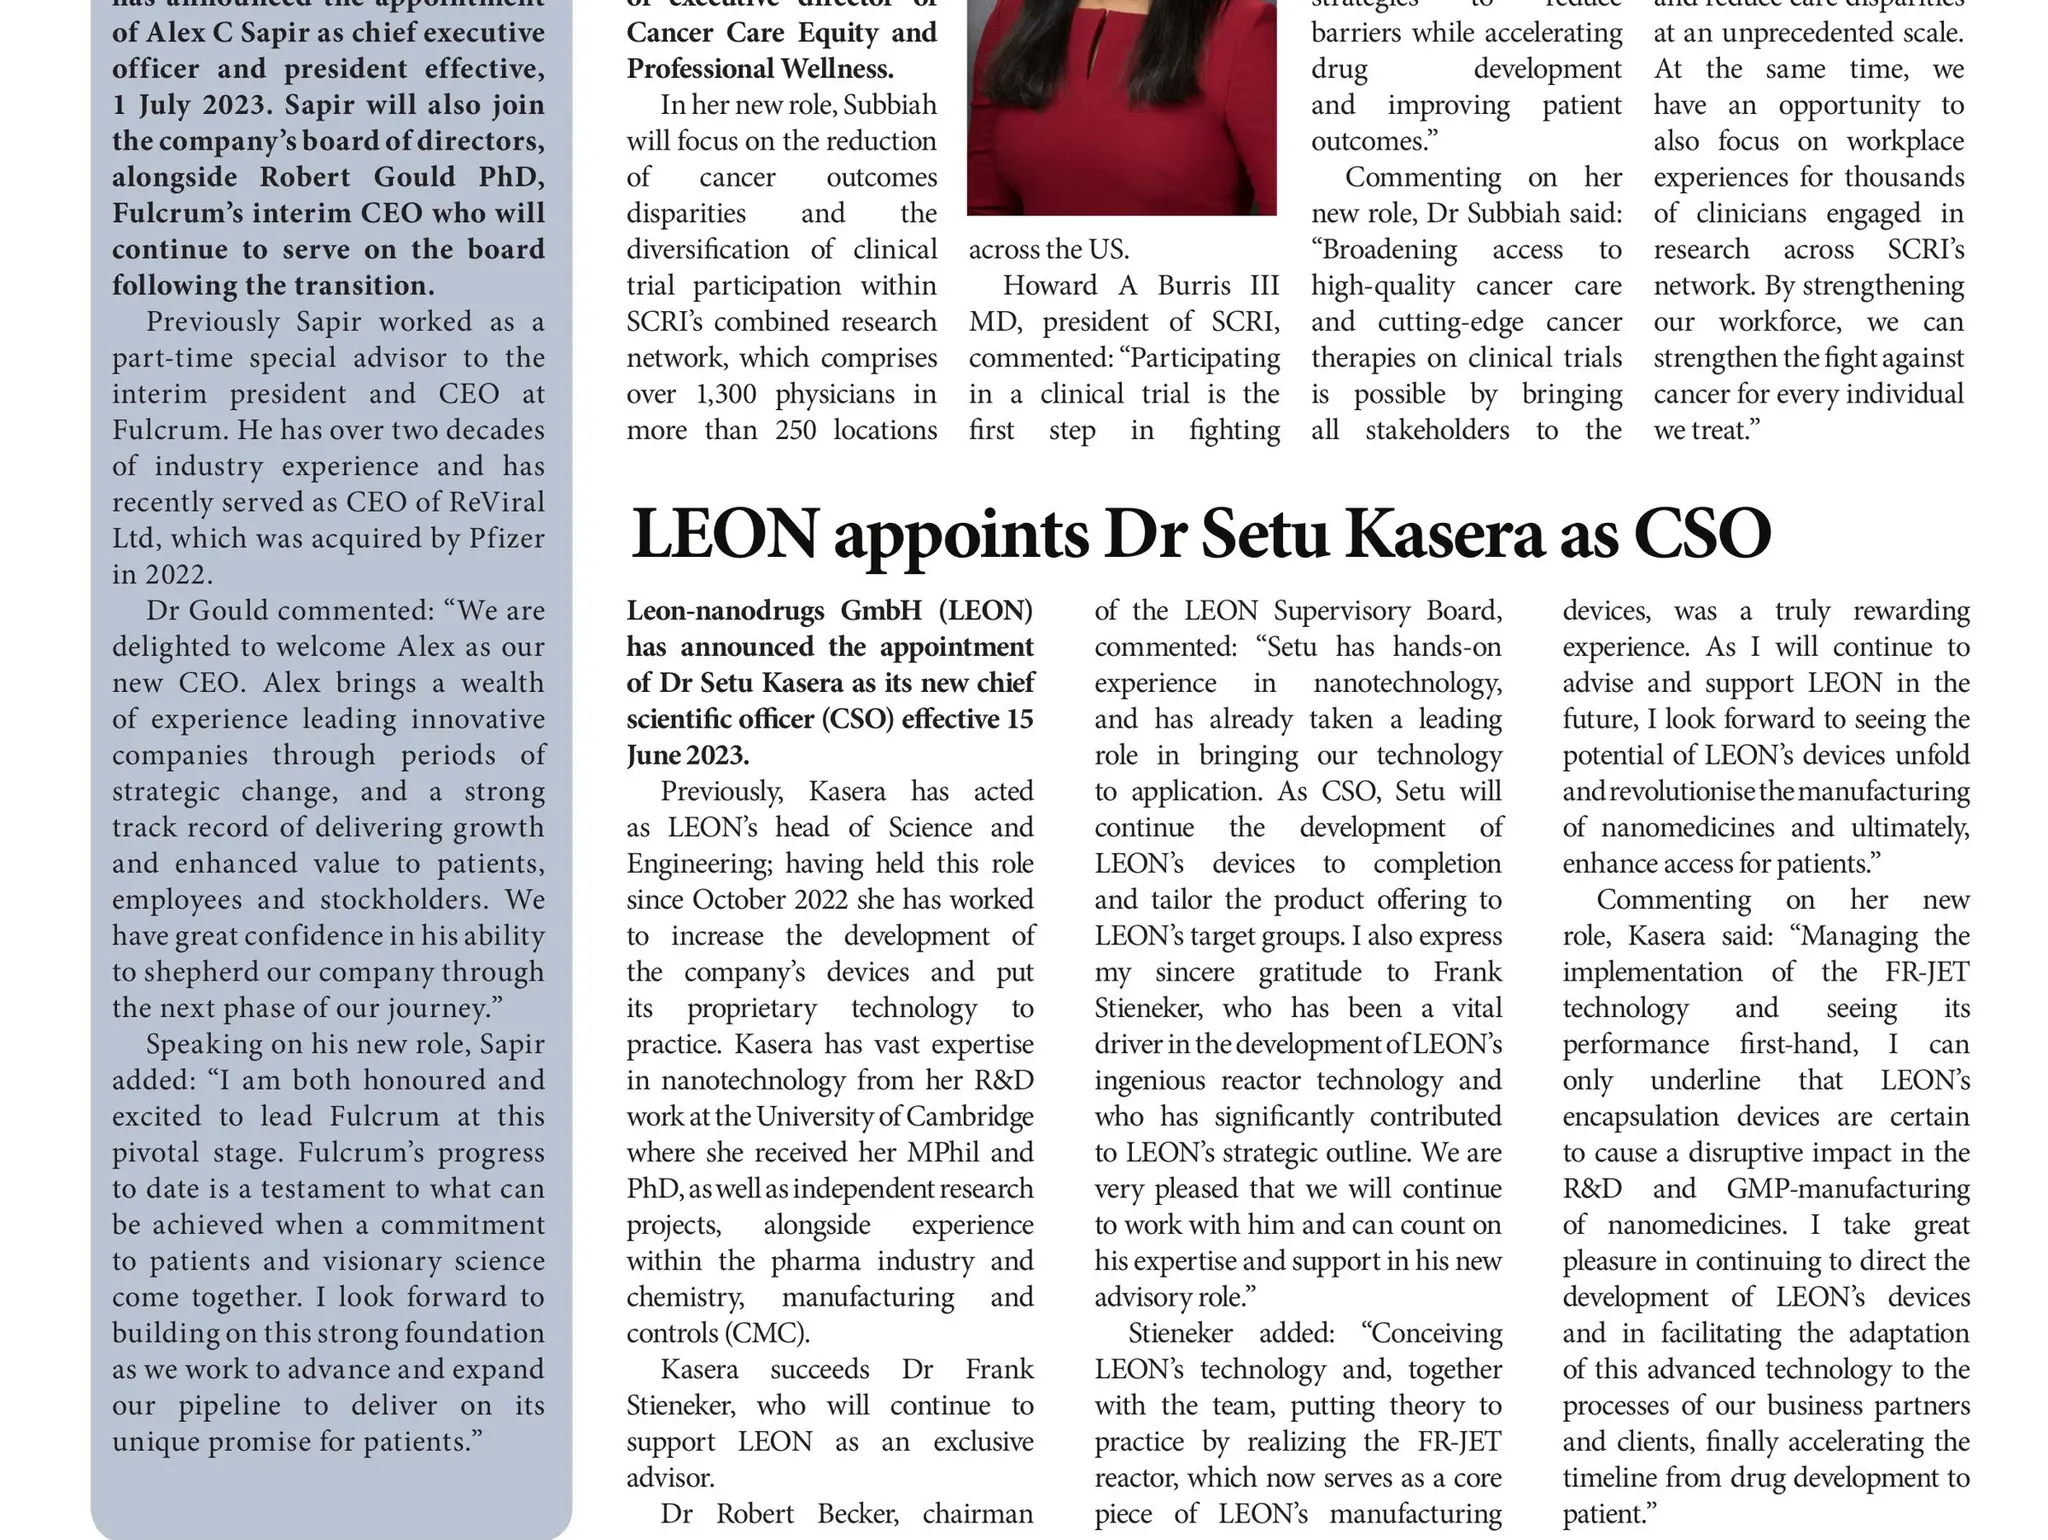 LEON appoints Dr Setu Kasera as CSO